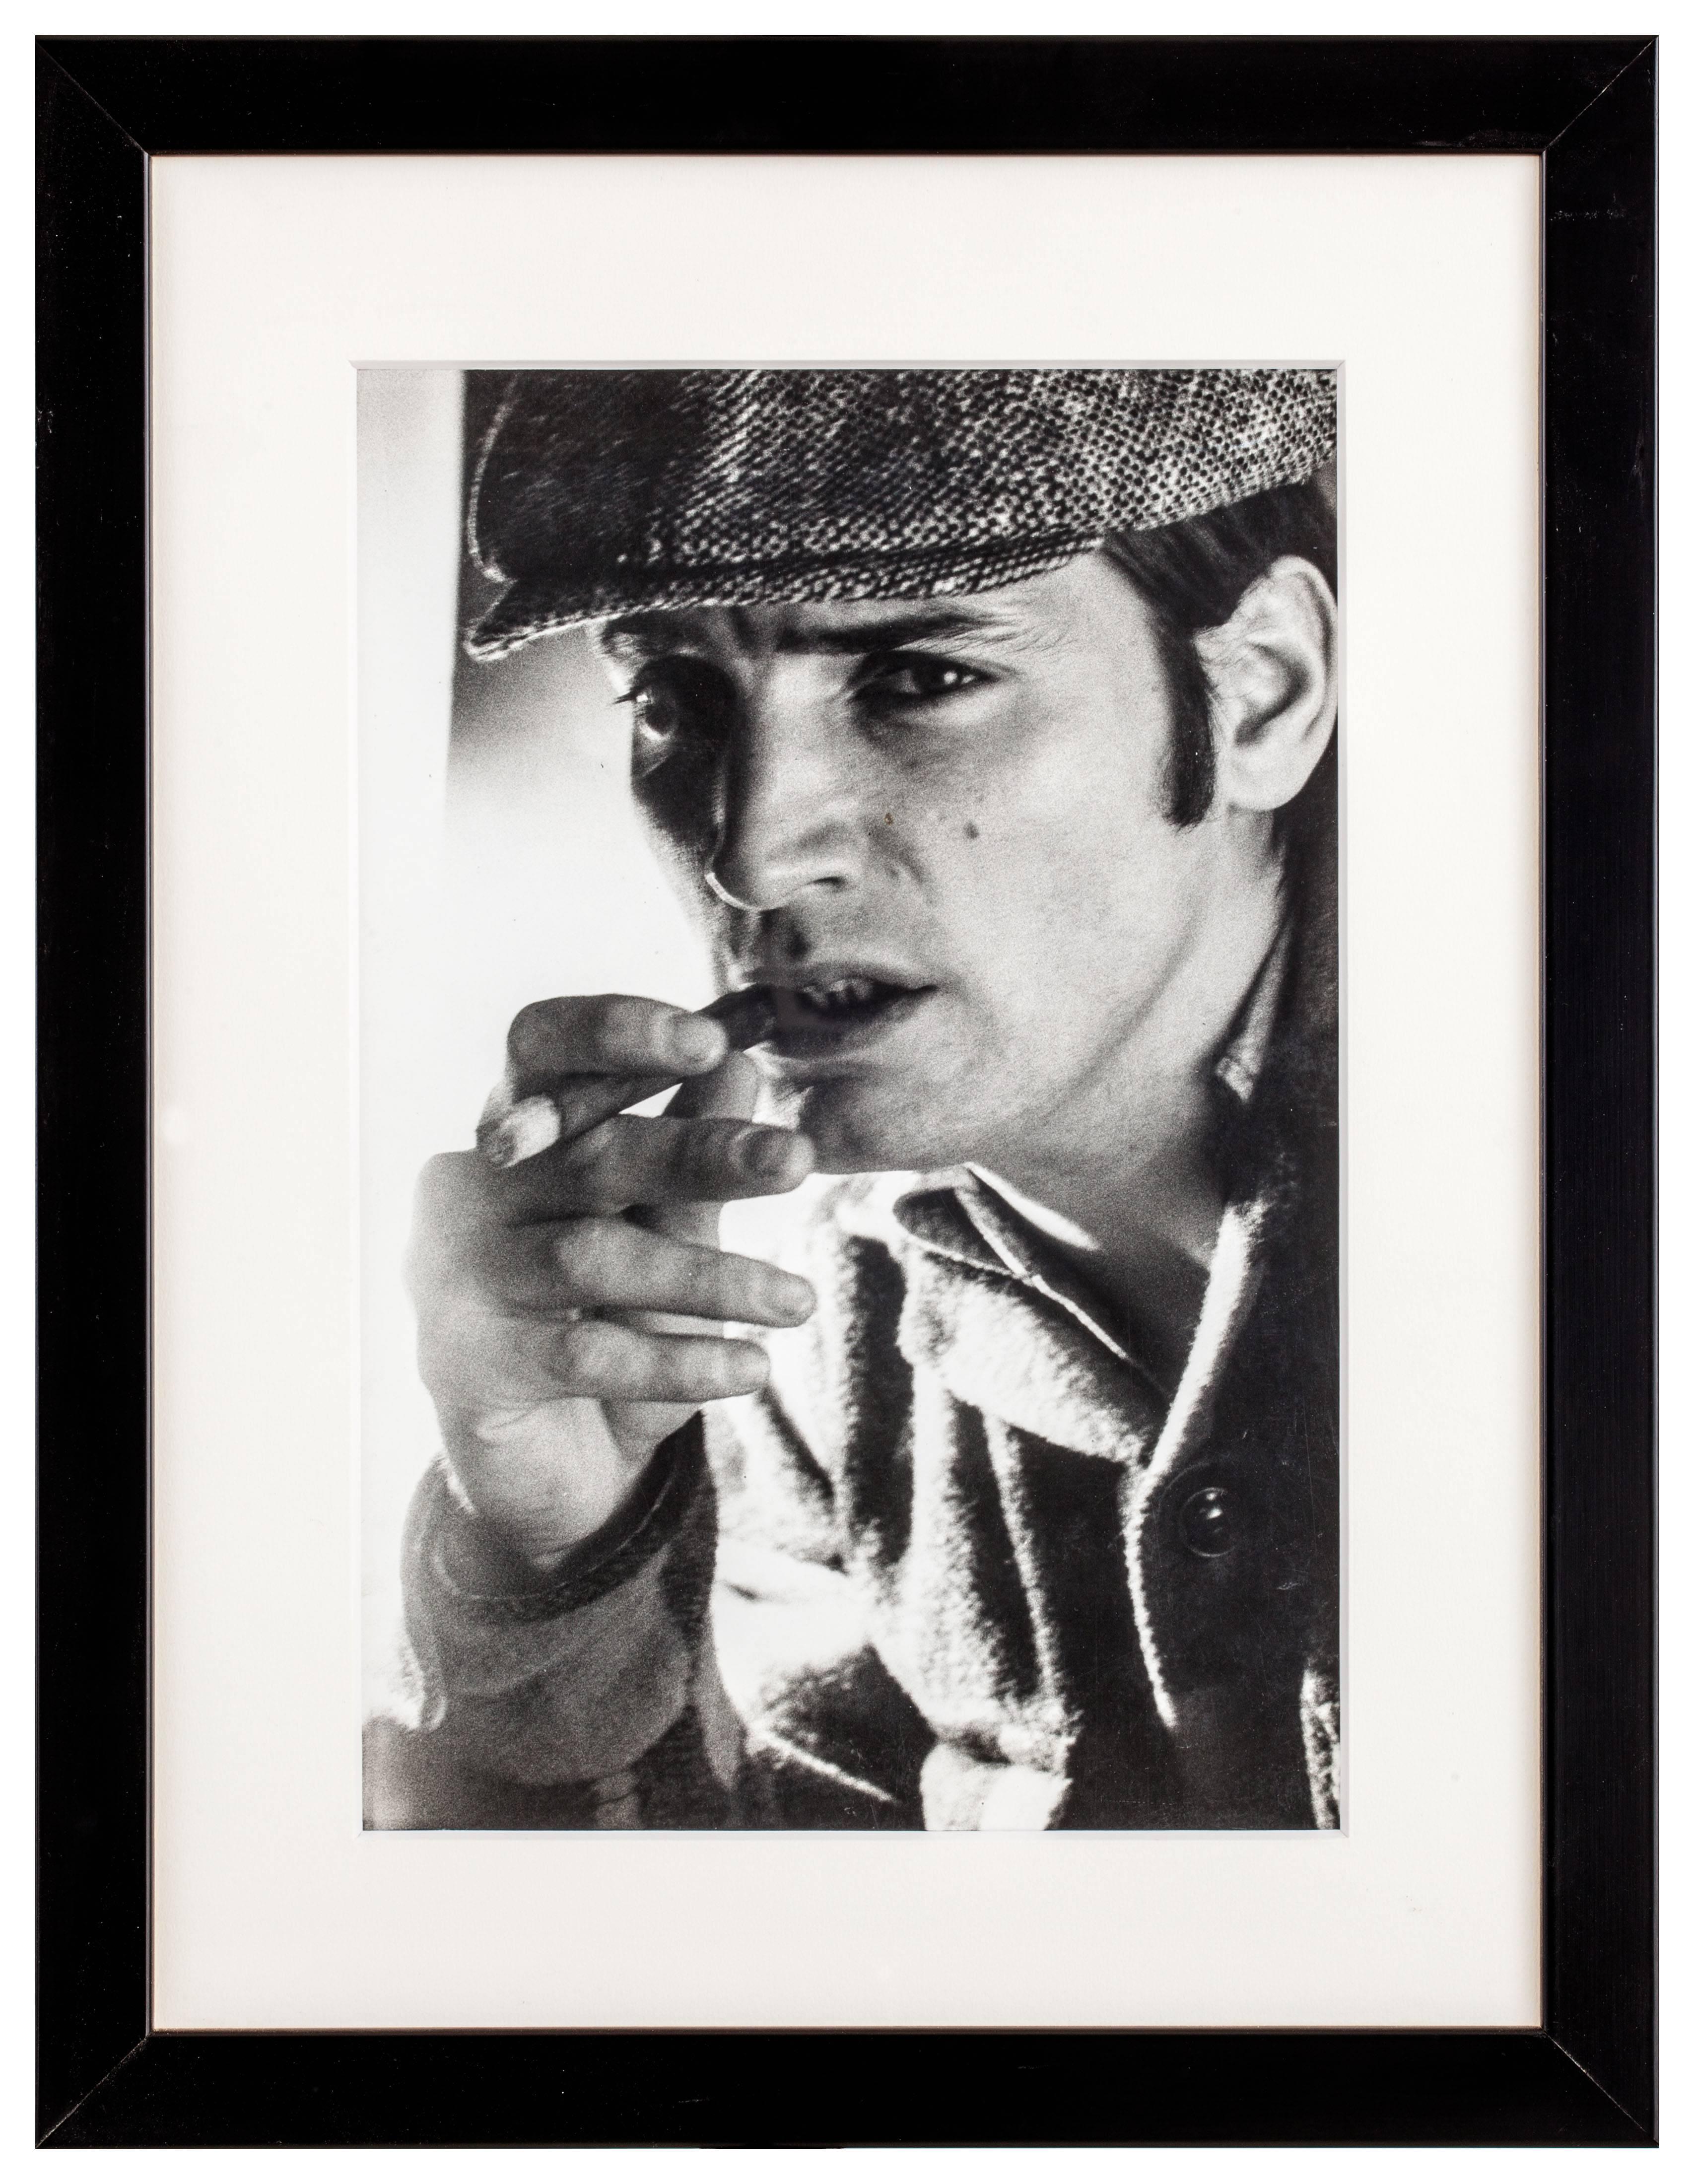 Unknown Portrait Photograph - Portrait of Joe Dallessandro, black&white photography, 1974 by Manfredi Bellati